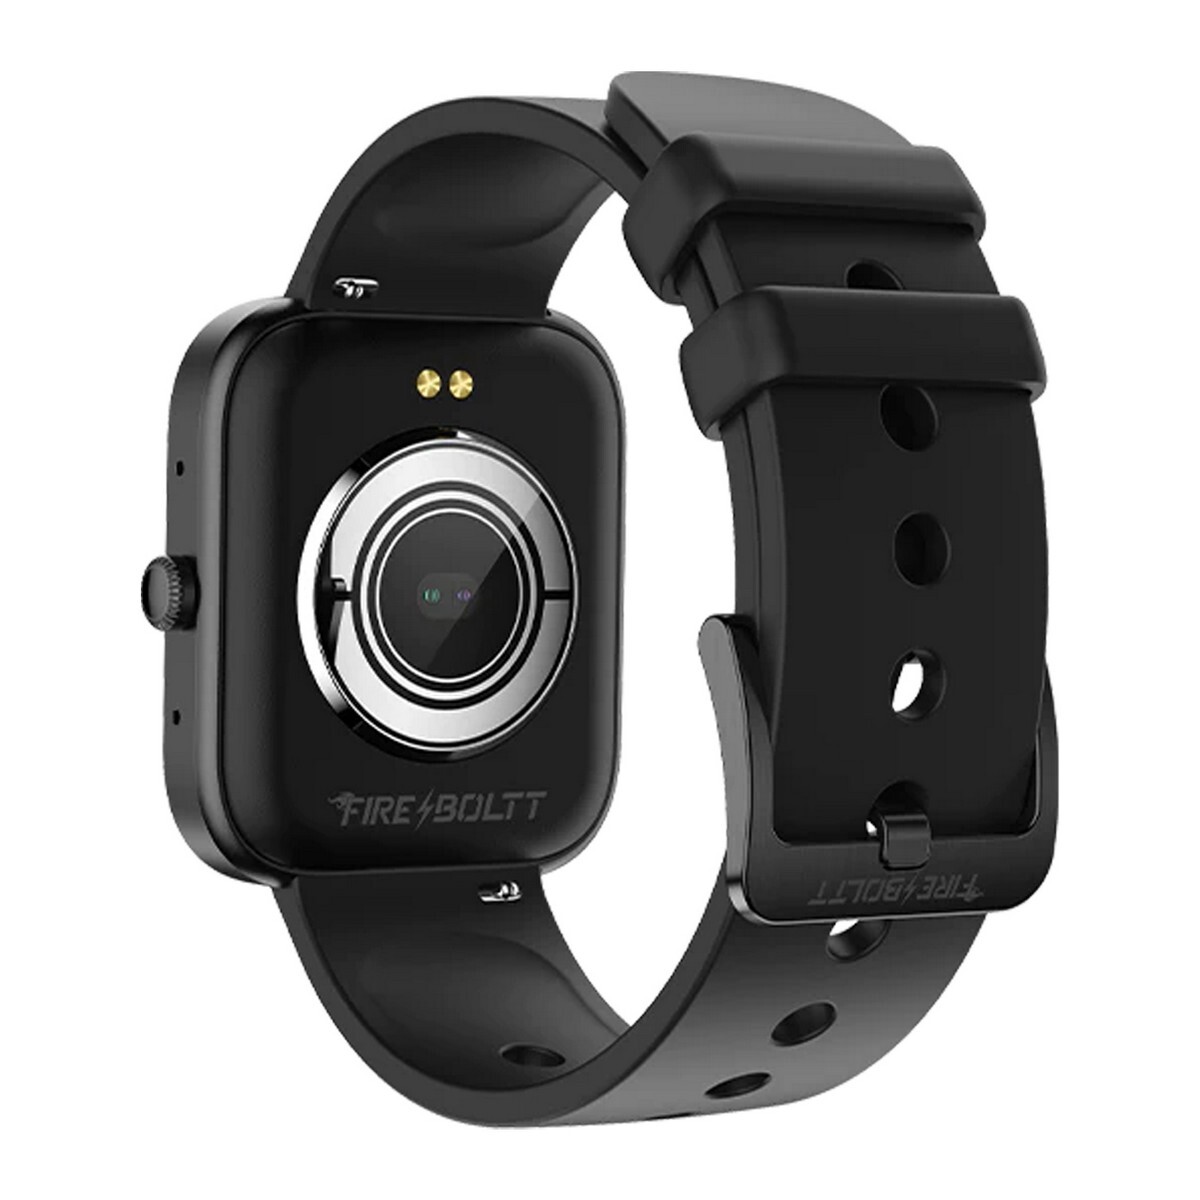 FireBolt Smart Watch Ninja Call 2 BSW025 Black